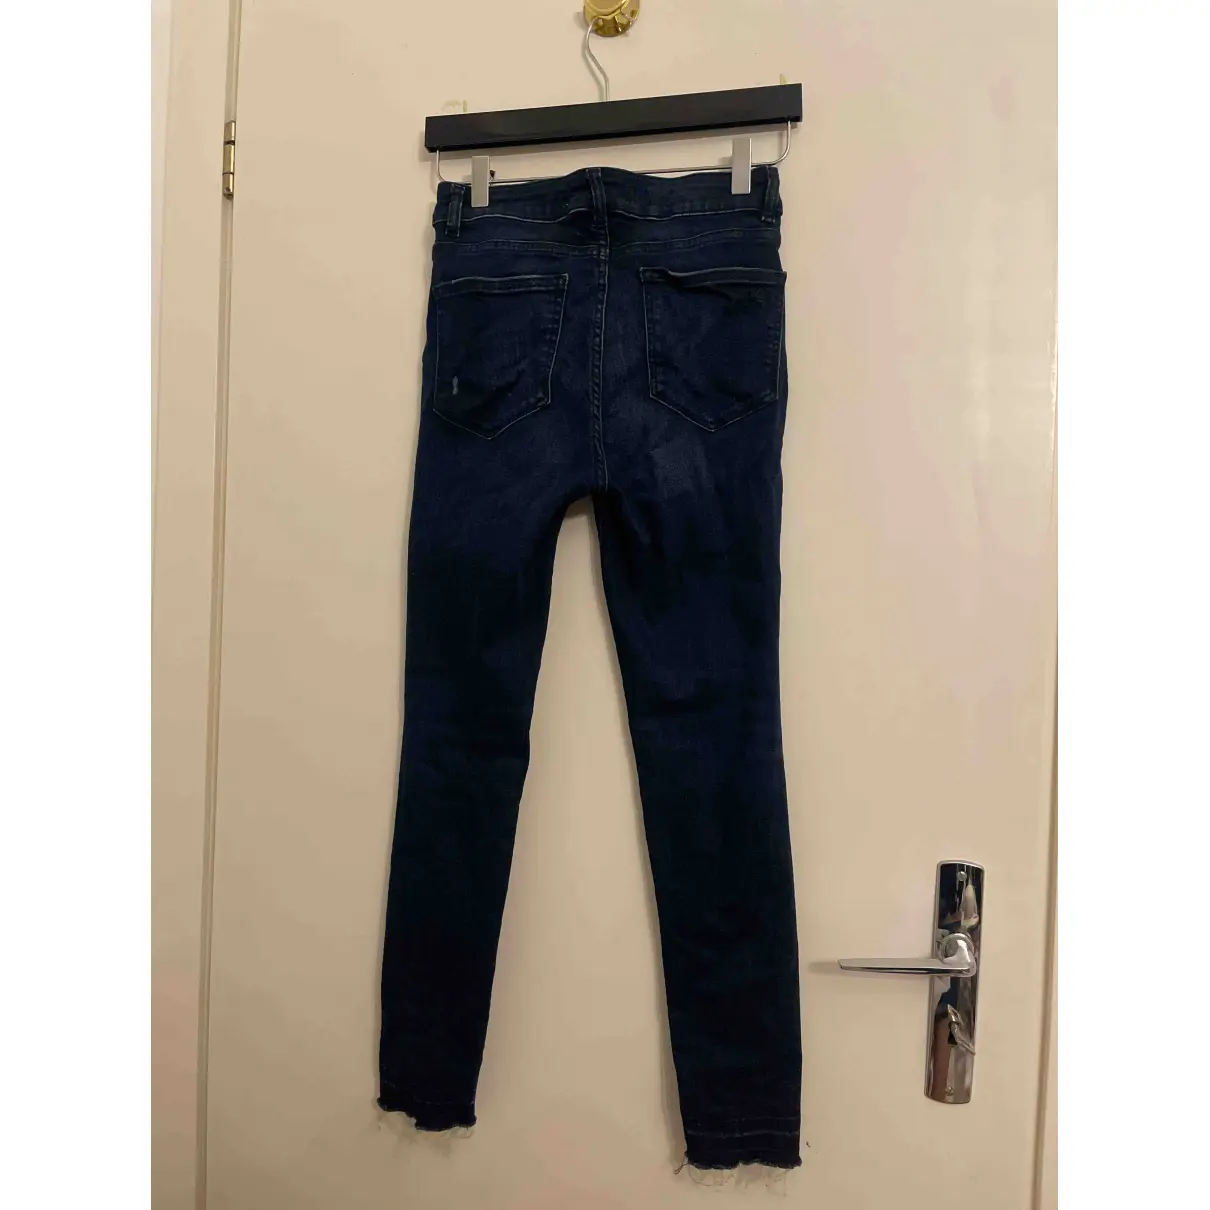 Buy DL1961 Slim jeans online